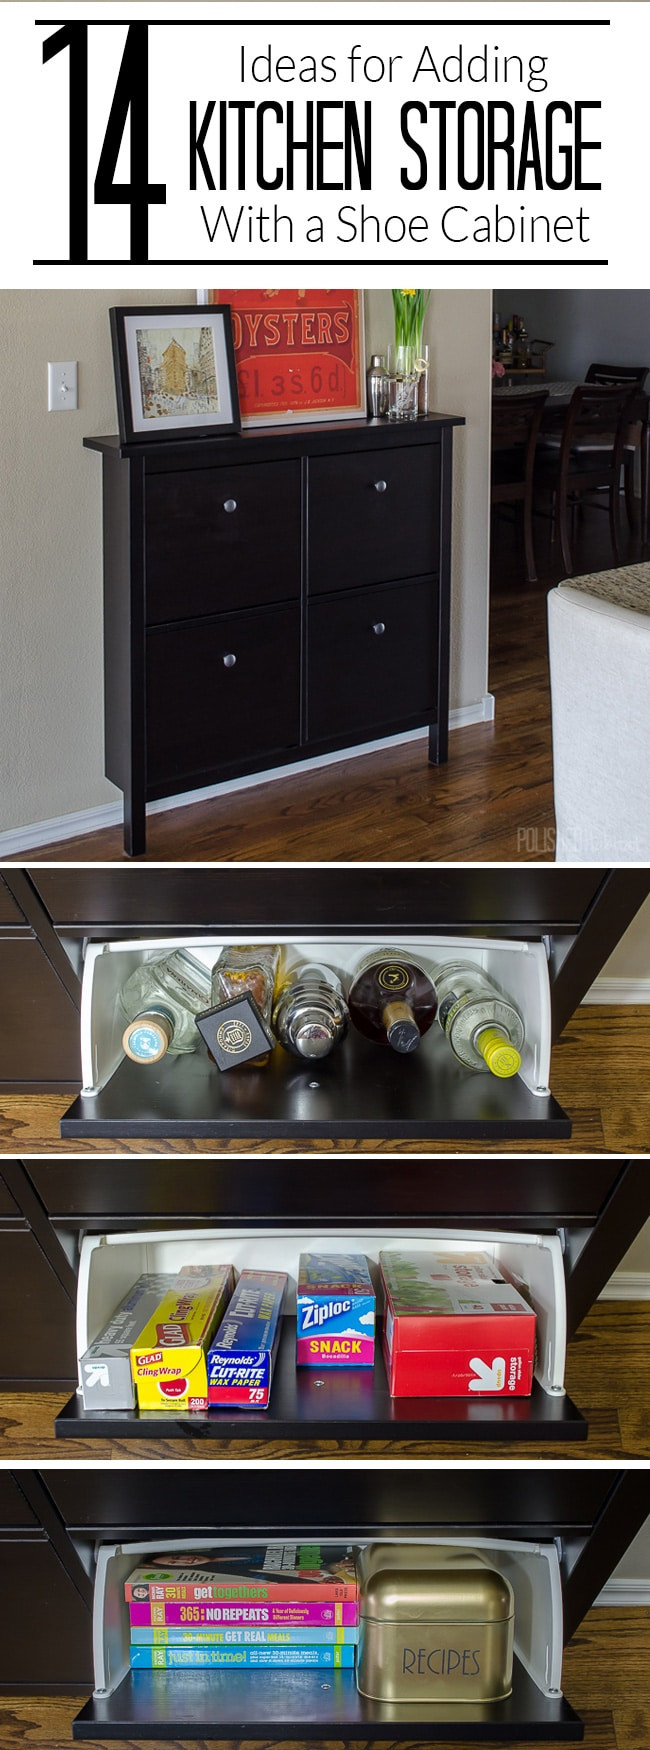 Extra Kitchen Storage Ideas
 14 Ways To Use an IKEA Shoe Cabinet For Extra Kitchen Storage